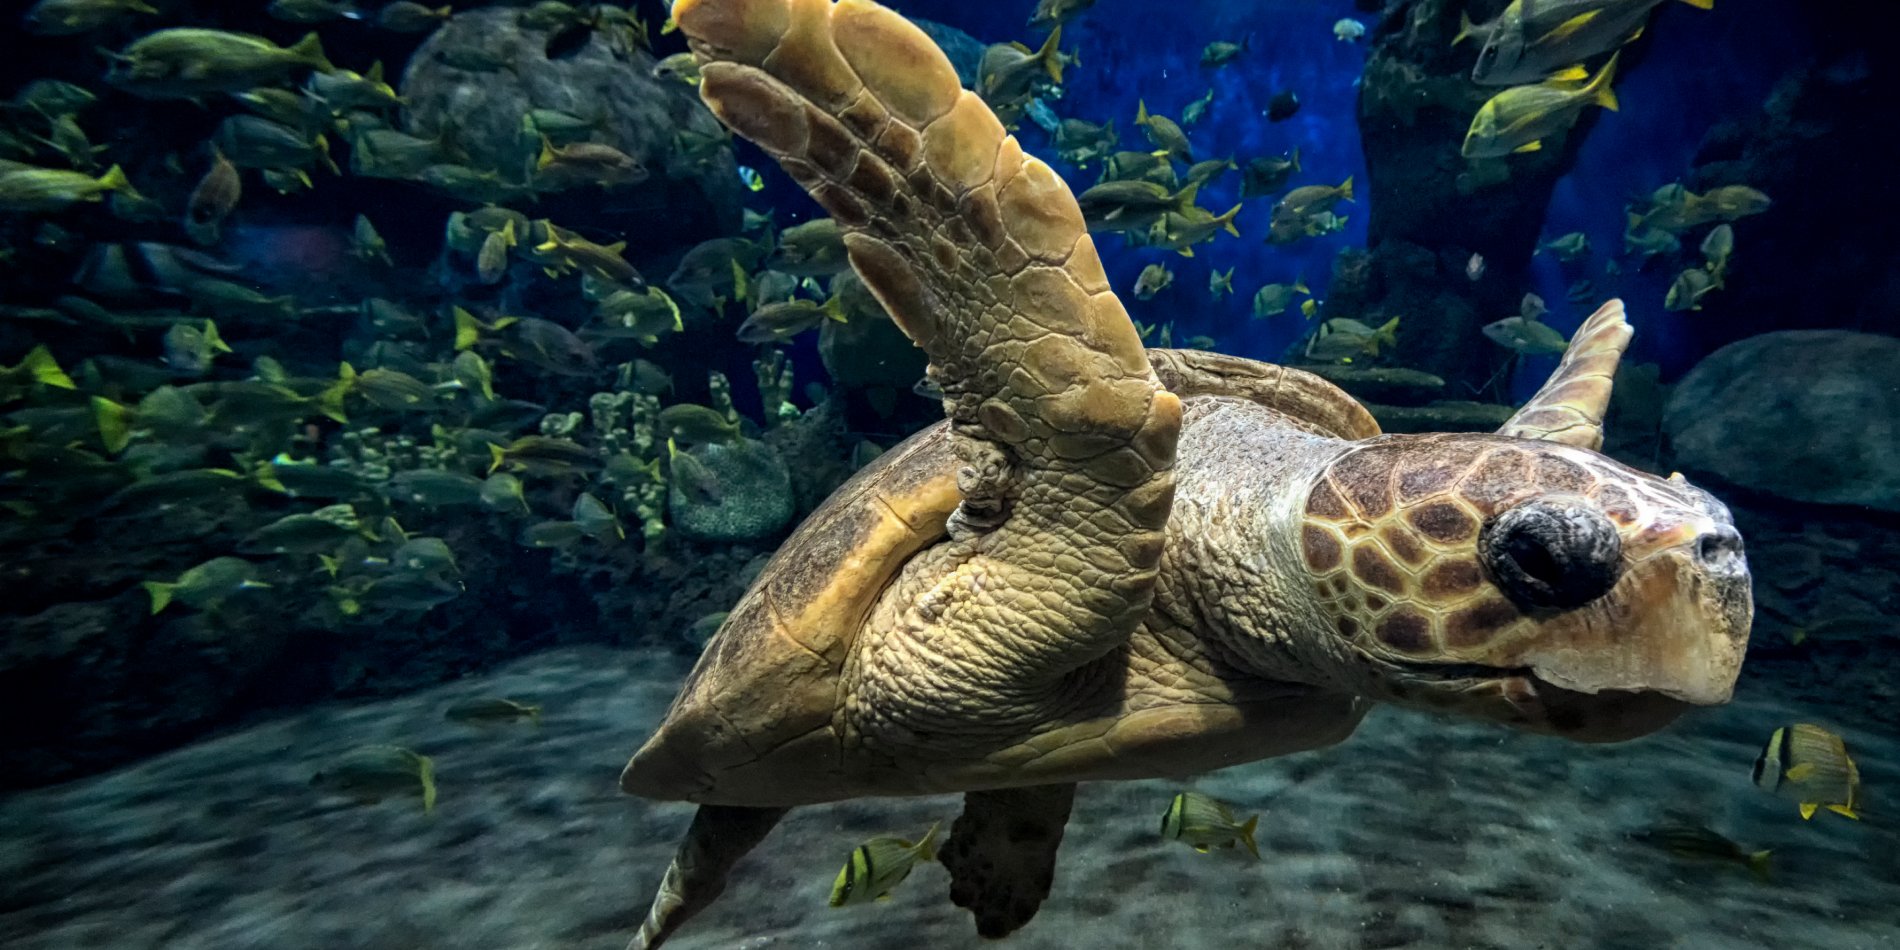 Sea Turtle at SeaWorld Inside Look event.